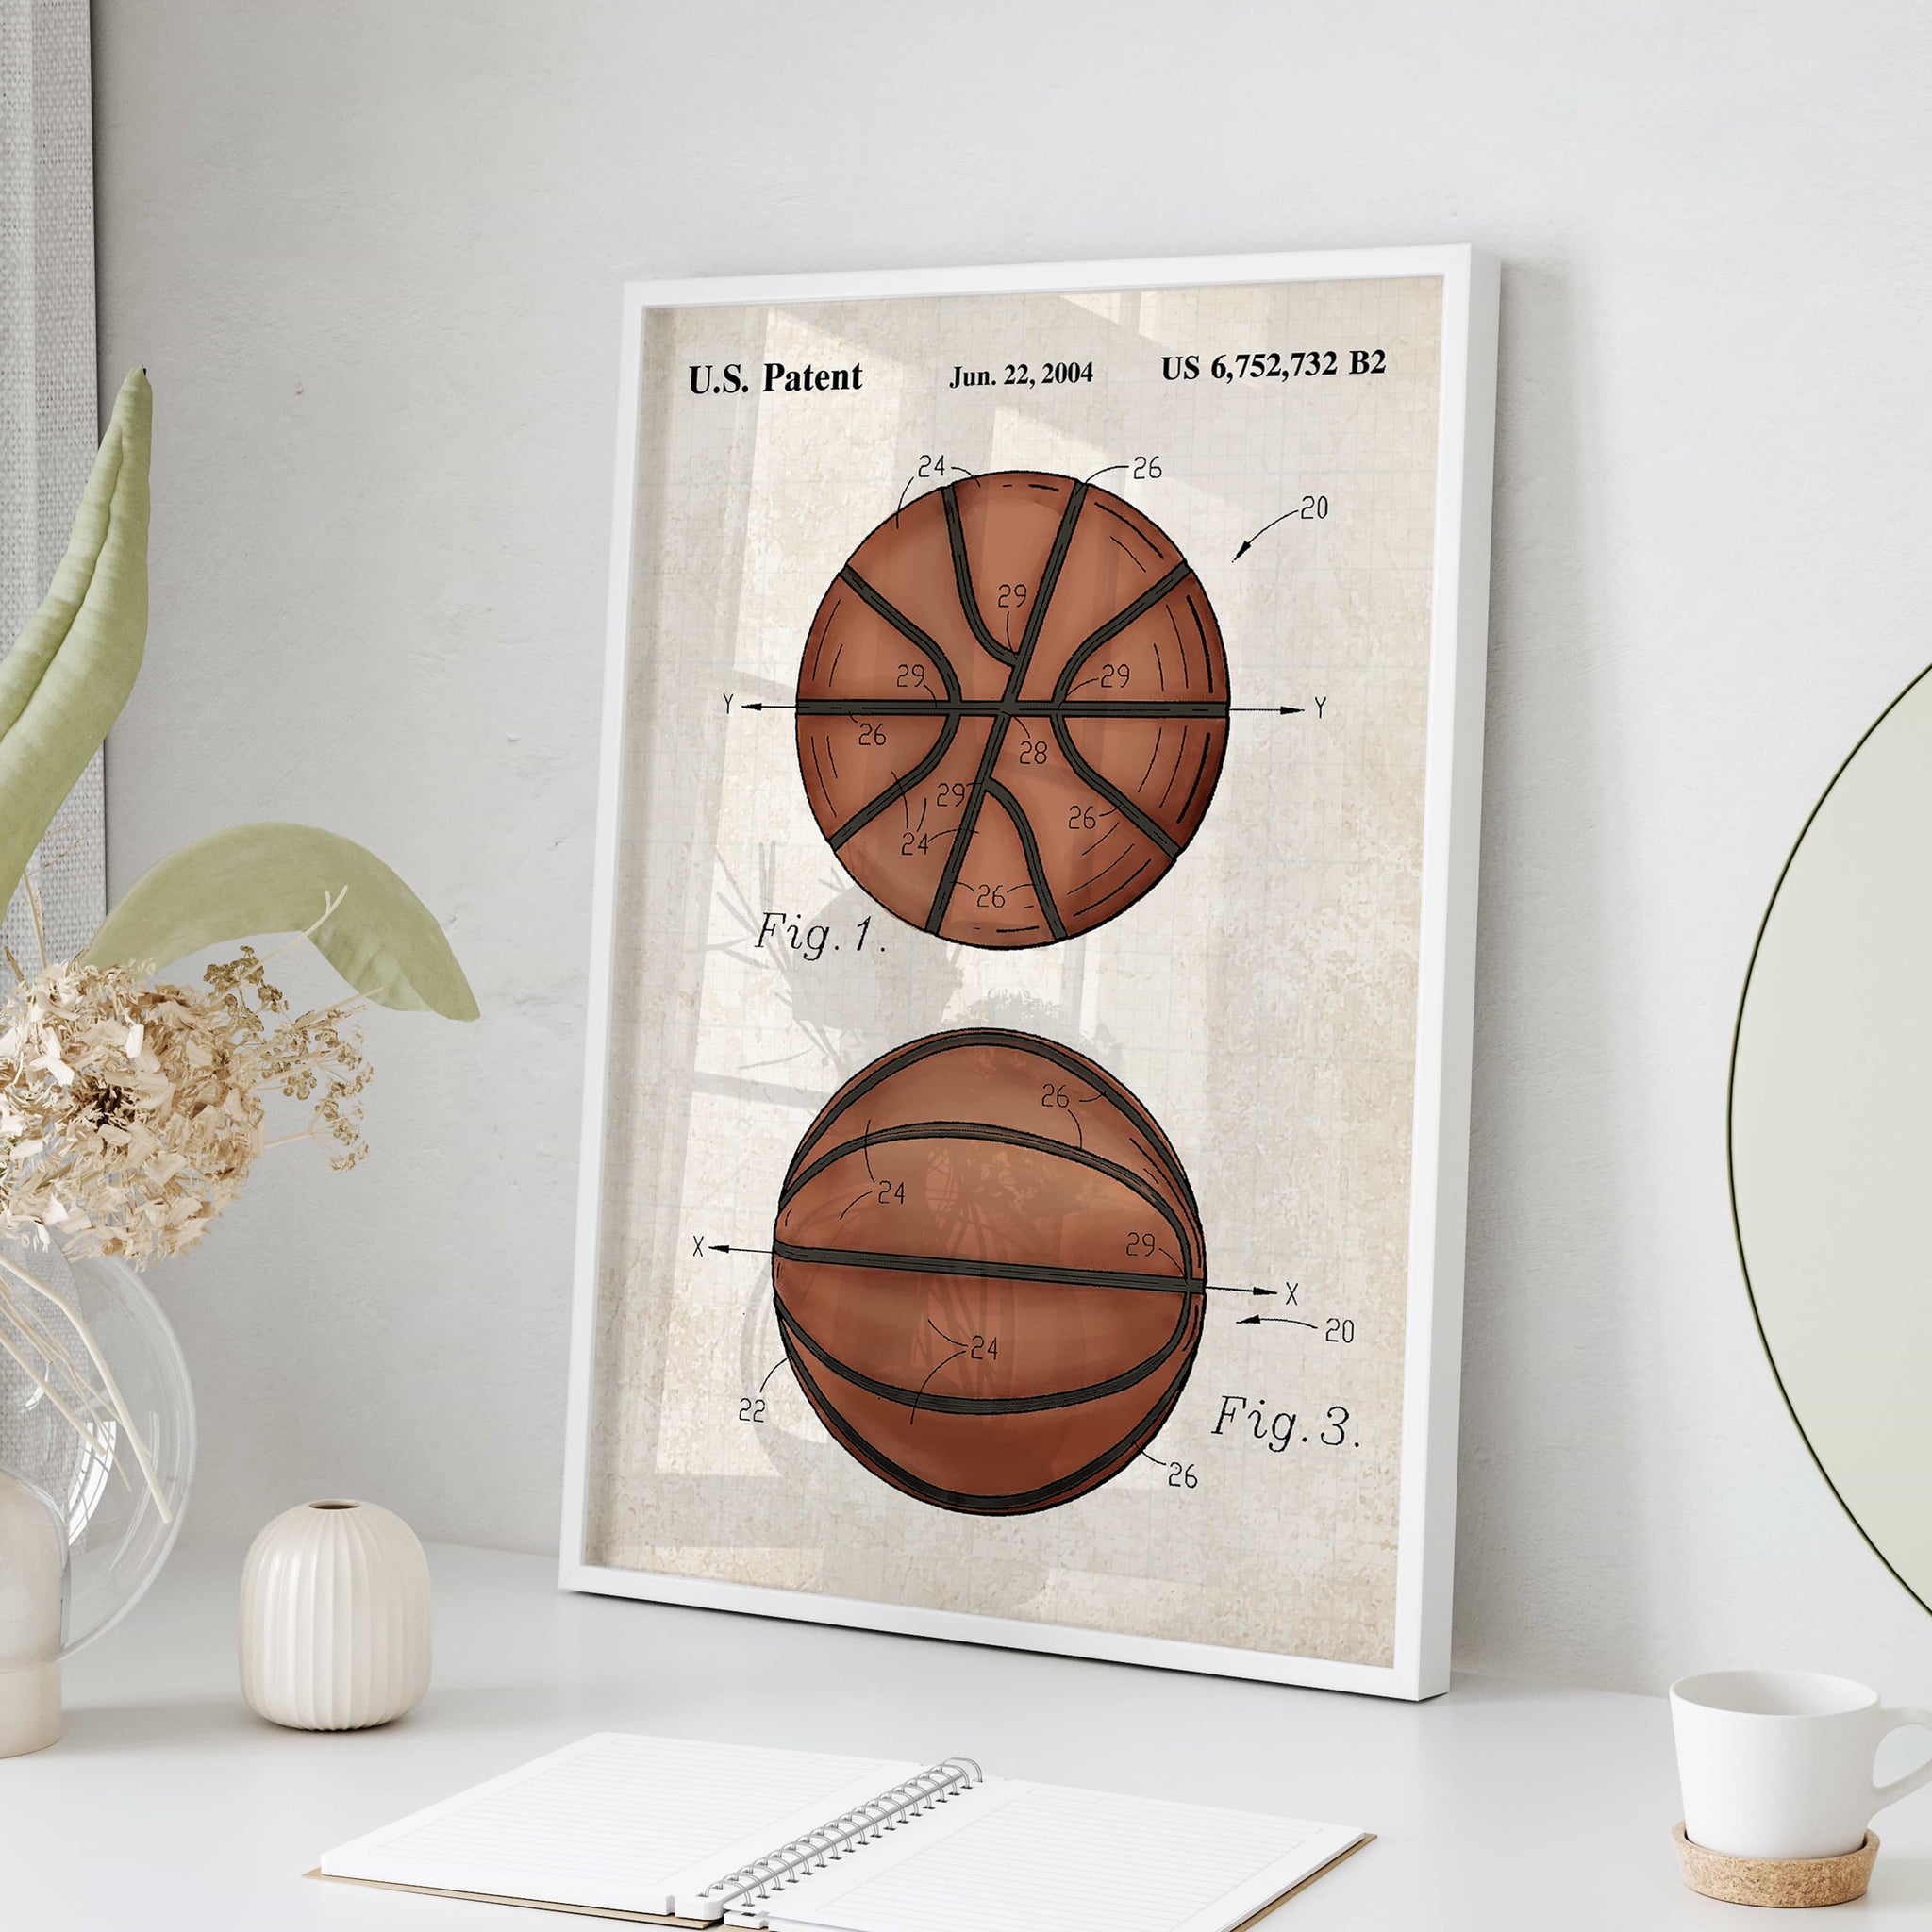 Stone wall and basketball print by Editors Choice